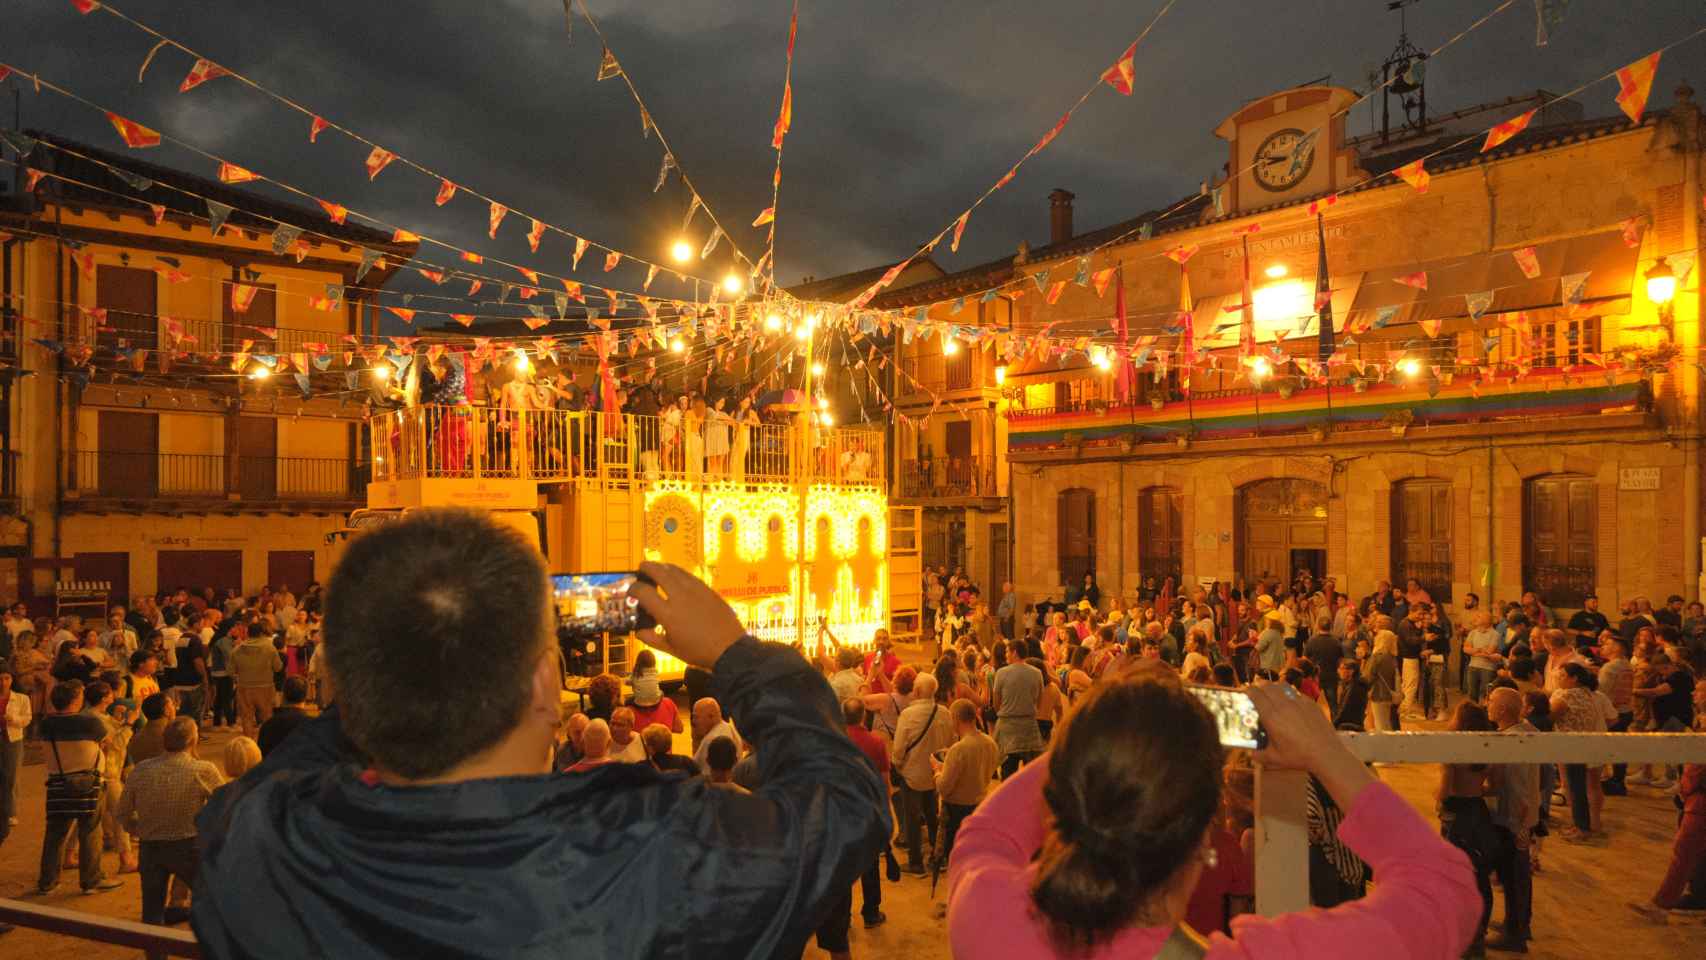 Fiesta 'Orgullo de Pueblo' de J&B celebrada en Candeleda, Ávila